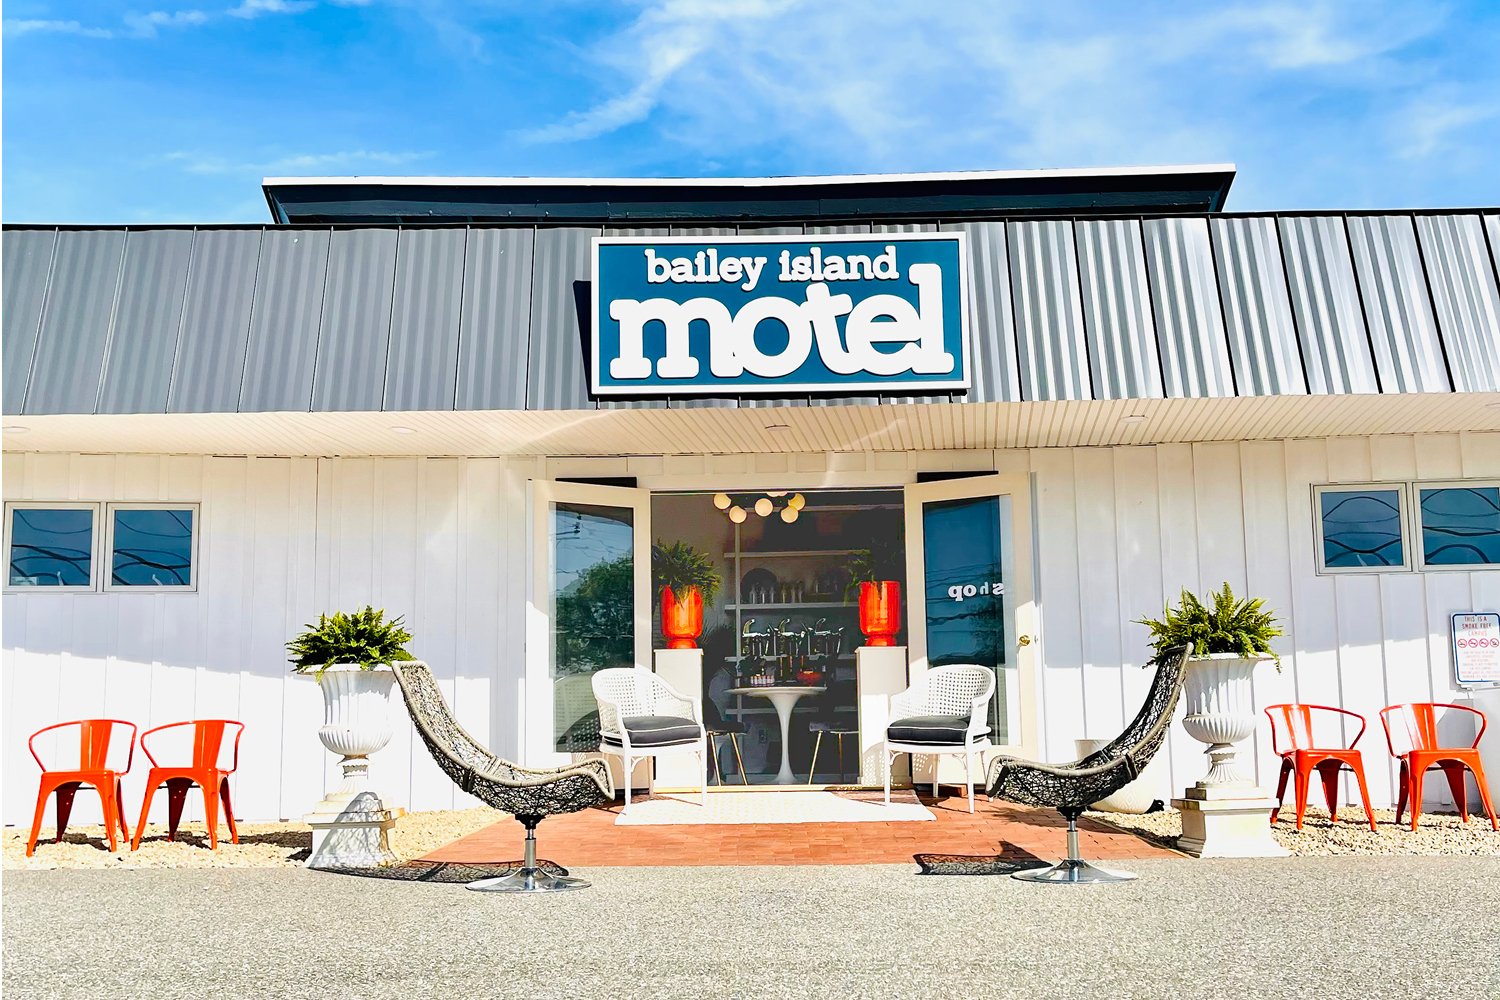 Bailey Island Motel and Bailey Island Mercantile